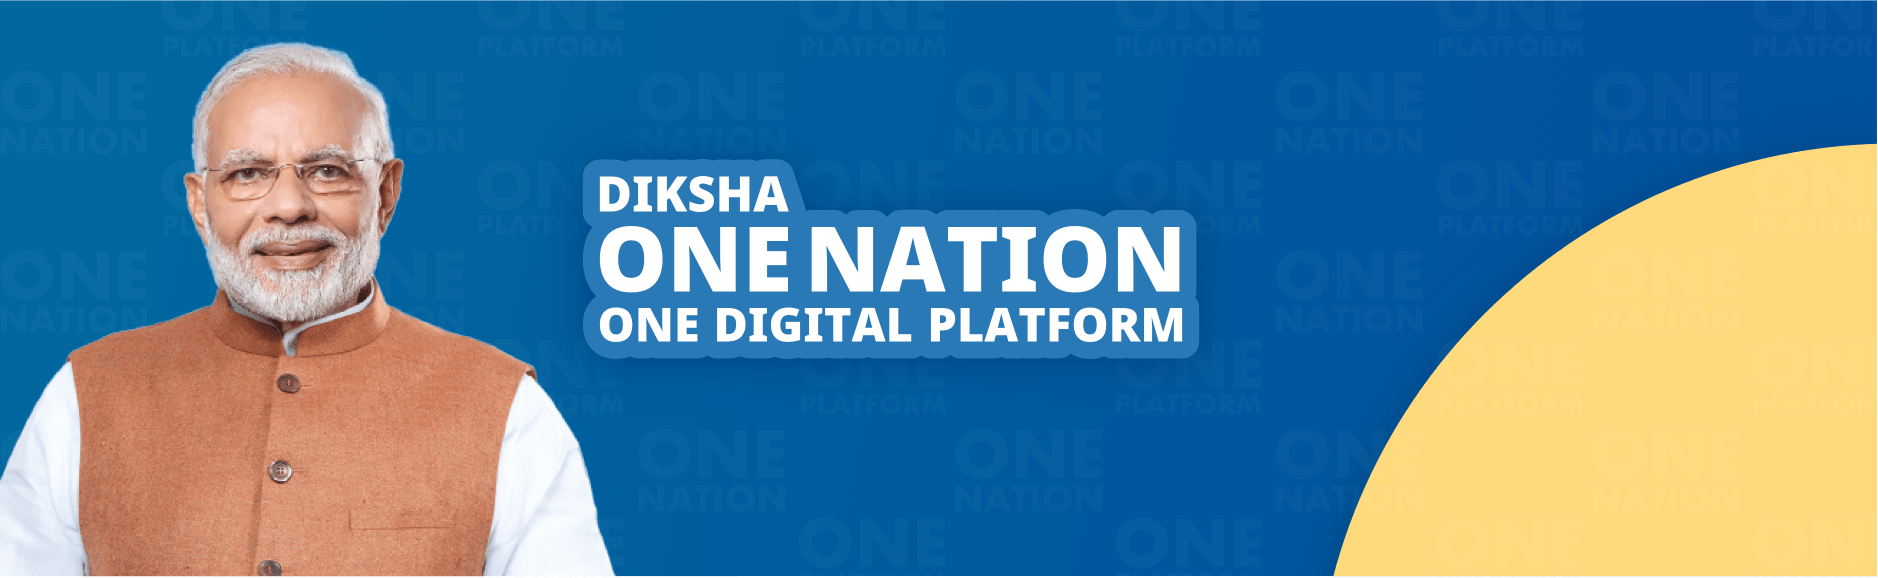 DIKSHA One nation one digital platform